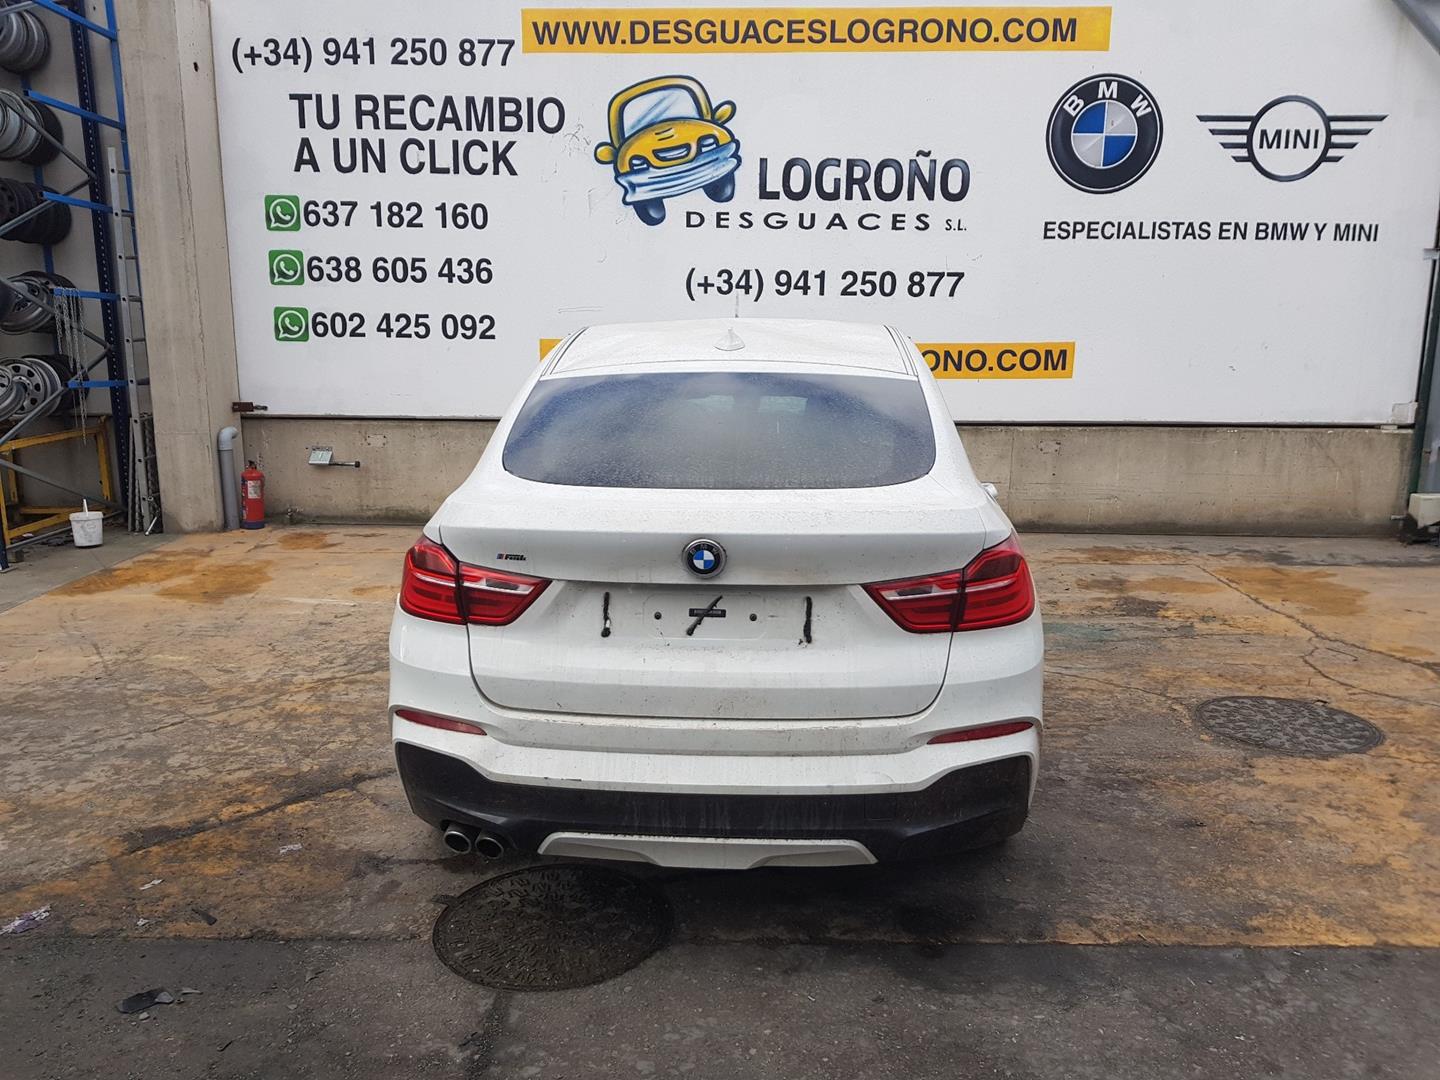 BMW X4 F26 (2014-2018) Garso stiprintuvas 65209291373, 65209291373 19828030